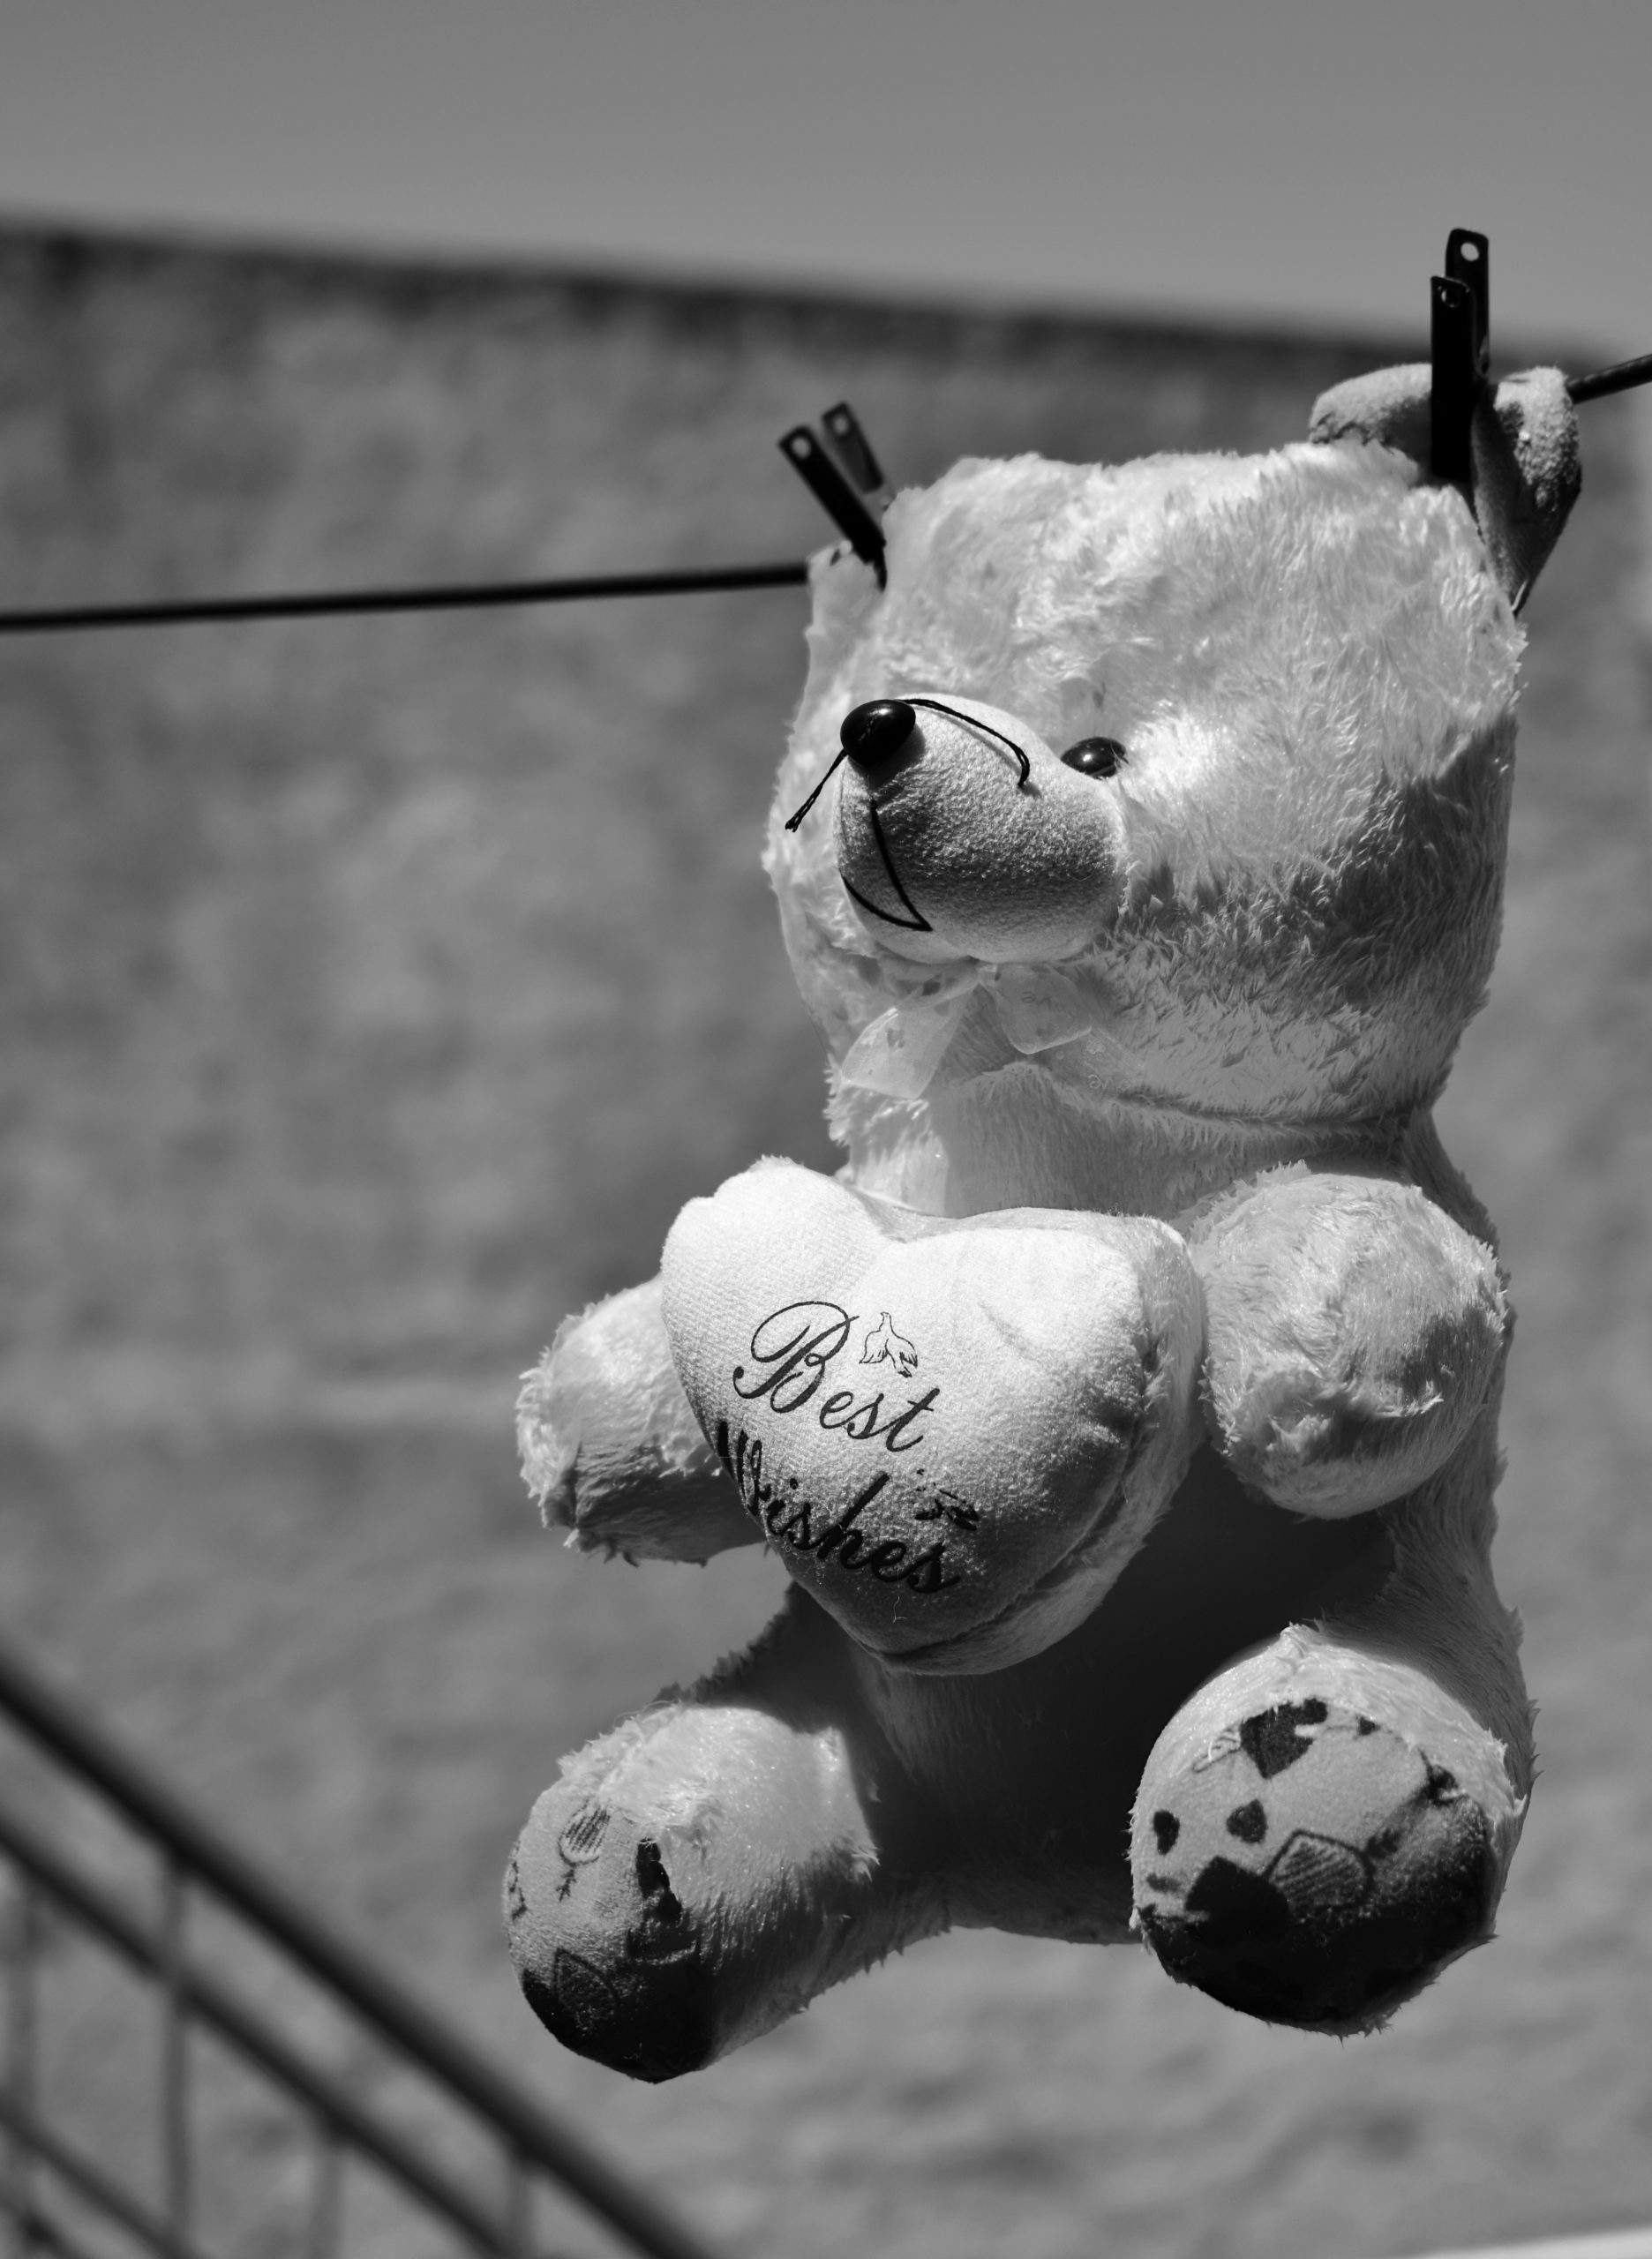 Teddy bear drying in sunlight.